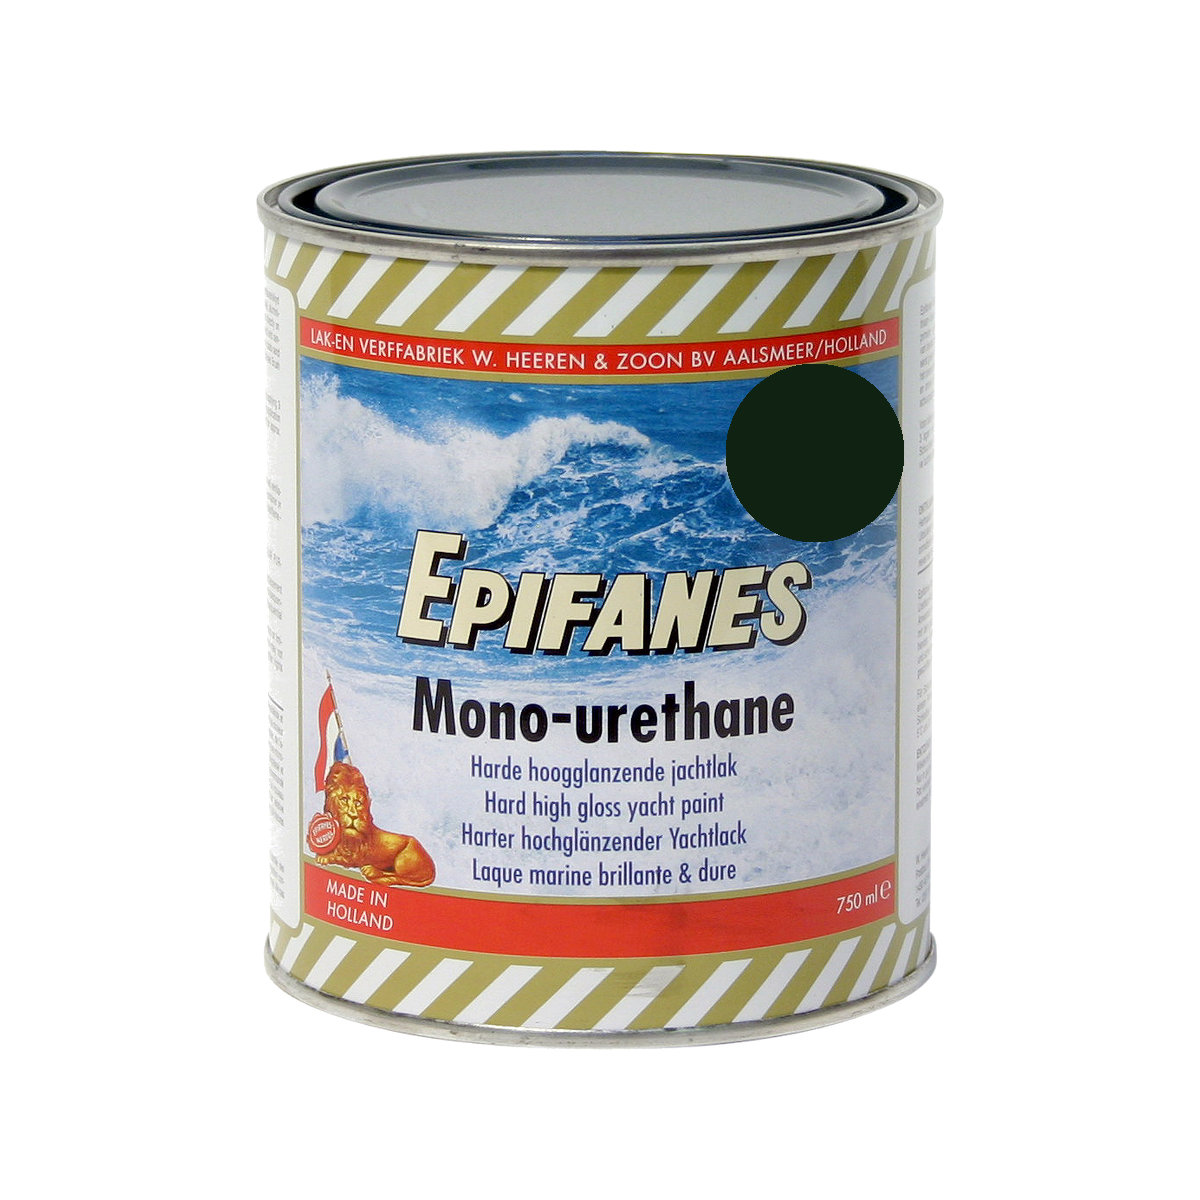 Epifanes mono-urethane jachtlak - groene 3165, 750ml